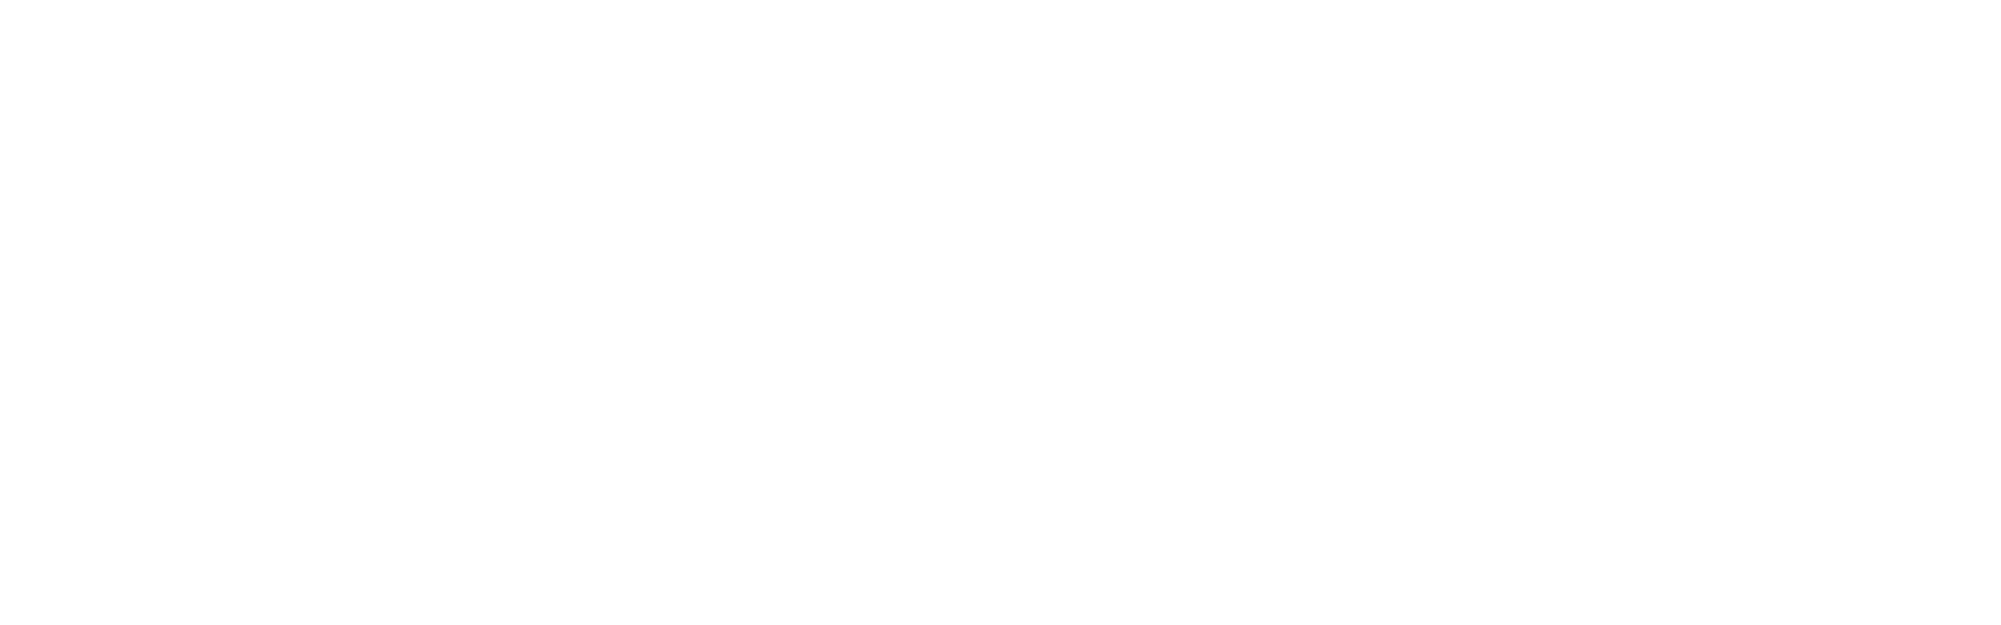 phpList logo in white